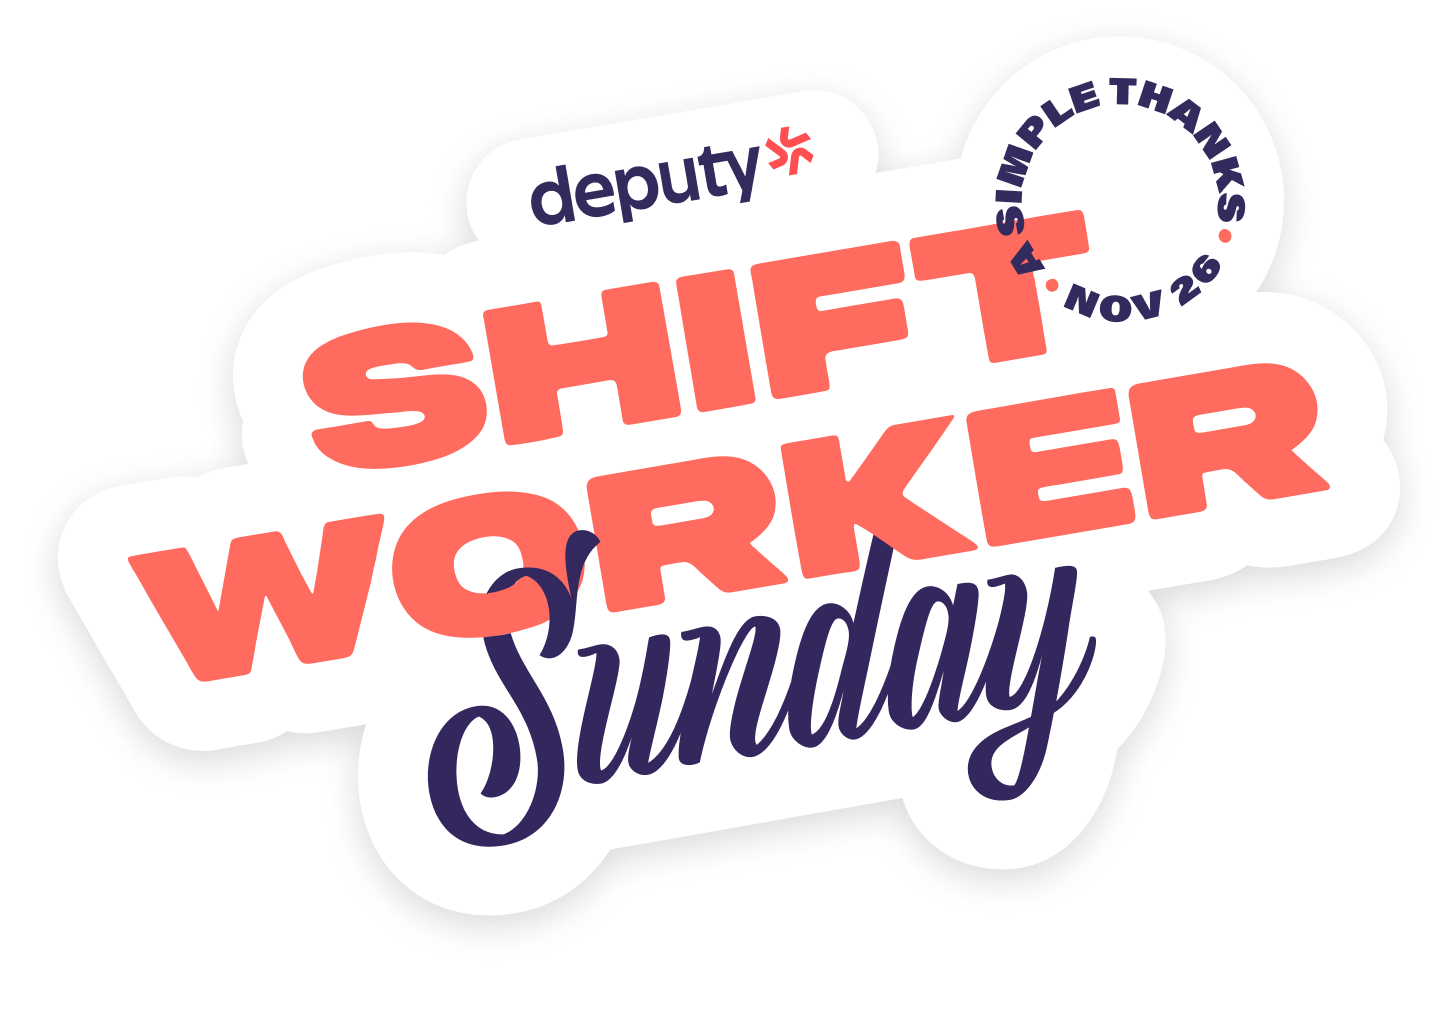 Deputy Shift Worker Sunday